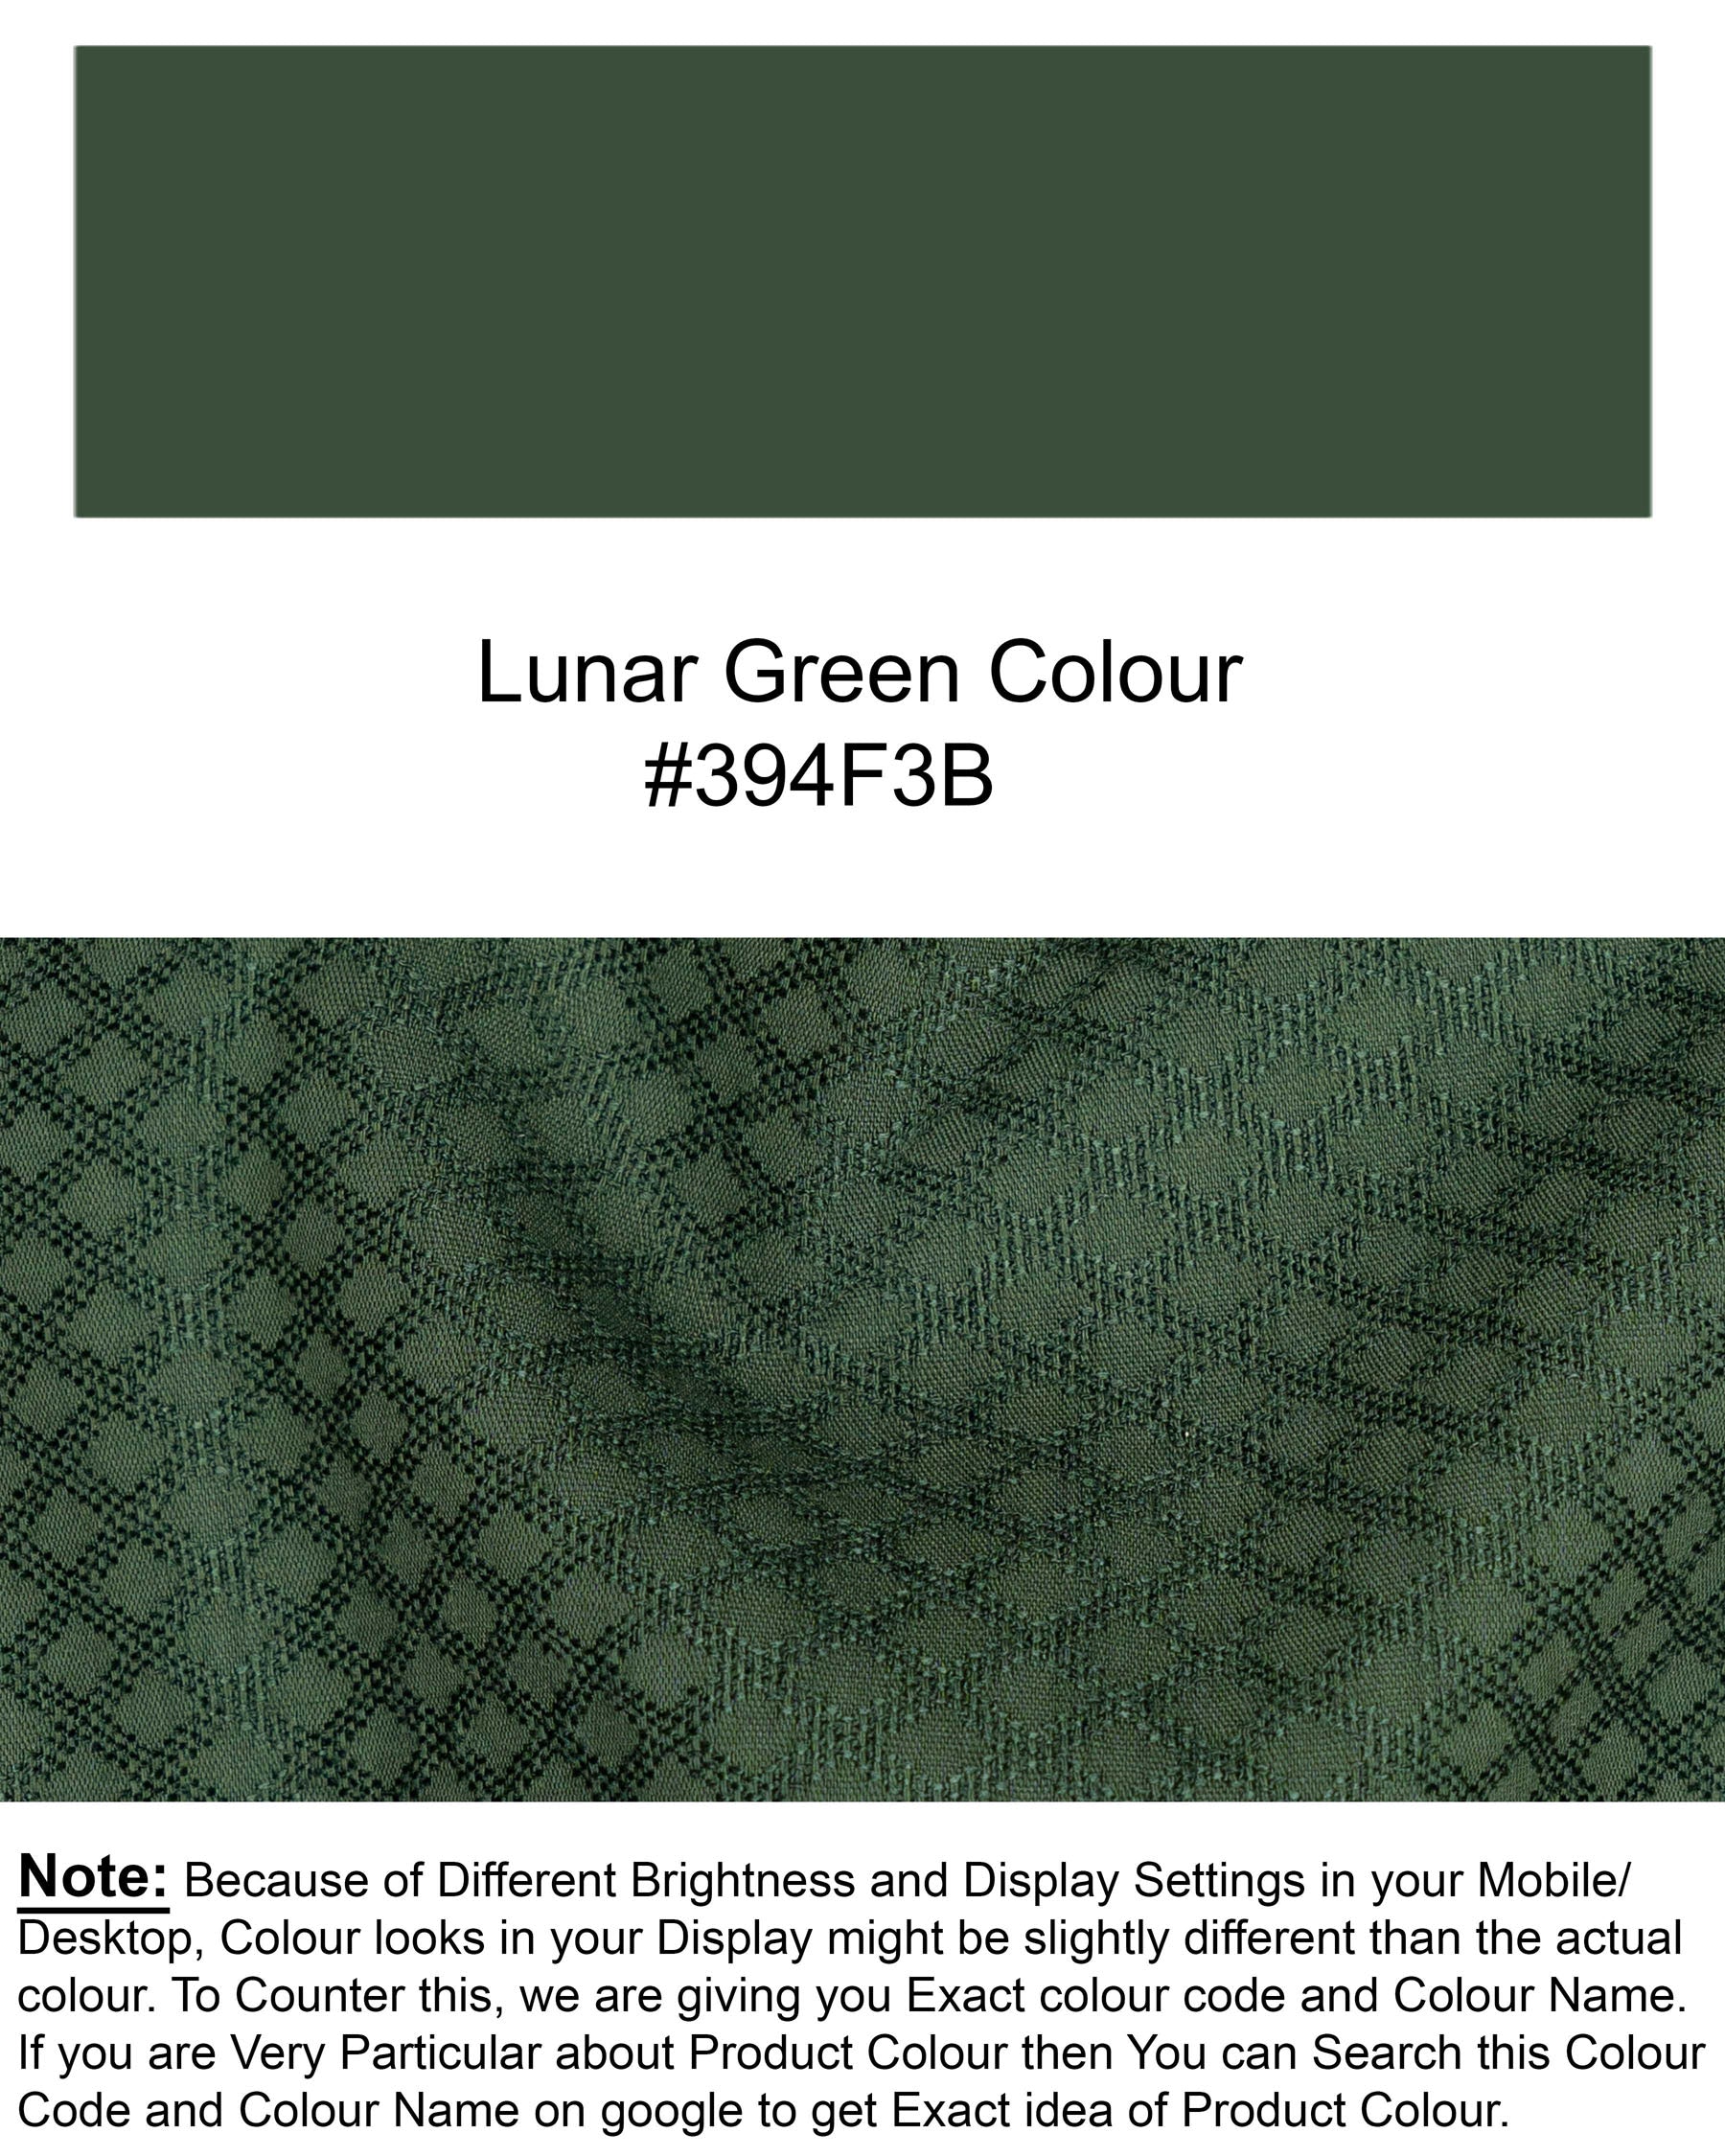 Lunar Green Rhombus Dobby Textured Premium Giza Cotton Shirt 6807-CA-38,6807-CA-38,6807-CA-39,6807-CA-39,6807-CA-40,6807-CA-40,6807-CA-42,6807-CA-42,6807-CA-44,6807-CA-44,6807-CA-46,6807-CA-46,6807-CA-48,6807-CA-48,6807-CA-50,6807-CA-50,6807-CA-52,6807-CA-52